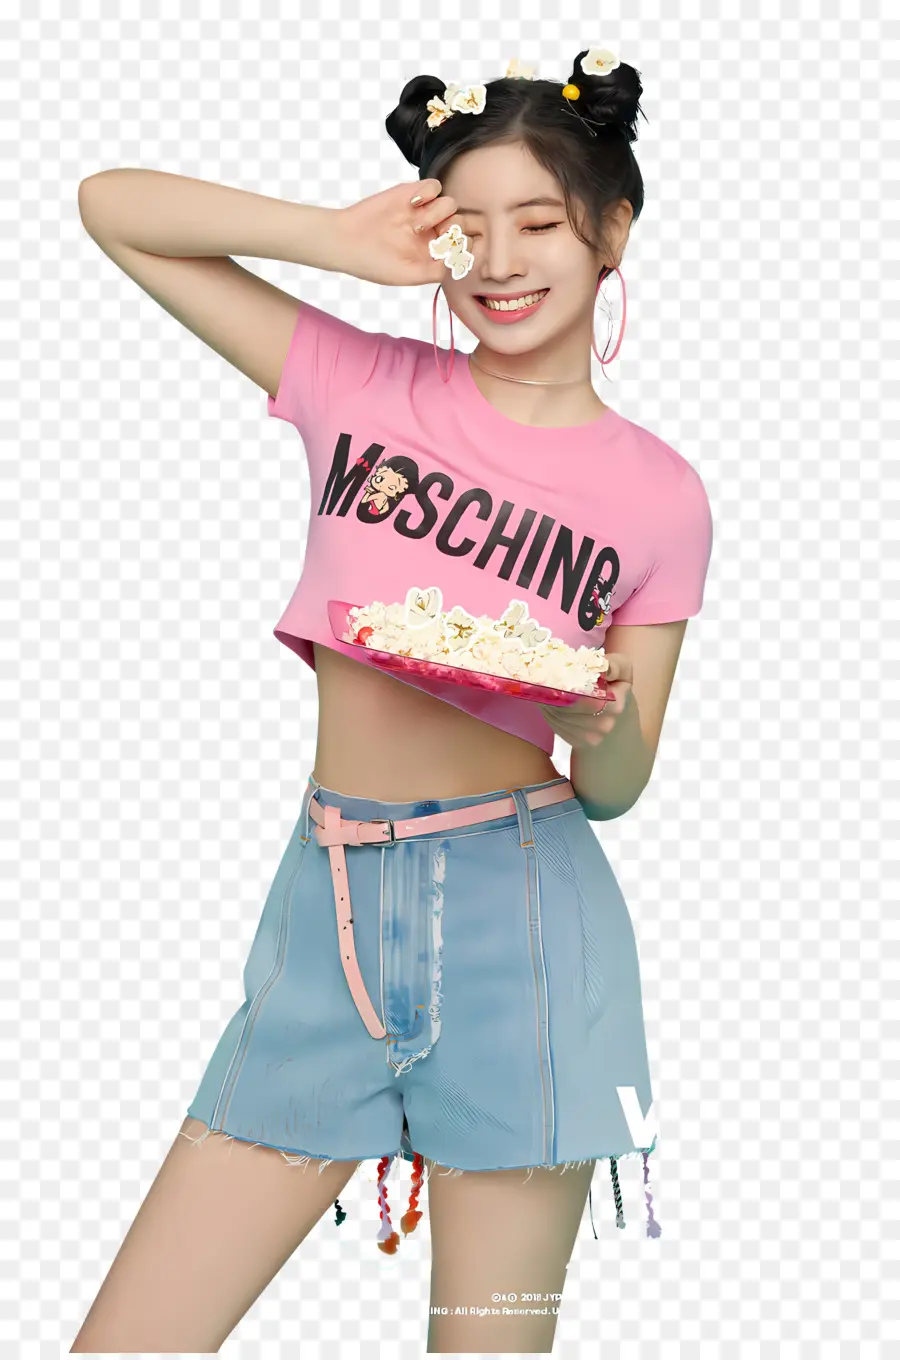 twice south korean girls mexican food fashion pink shirt